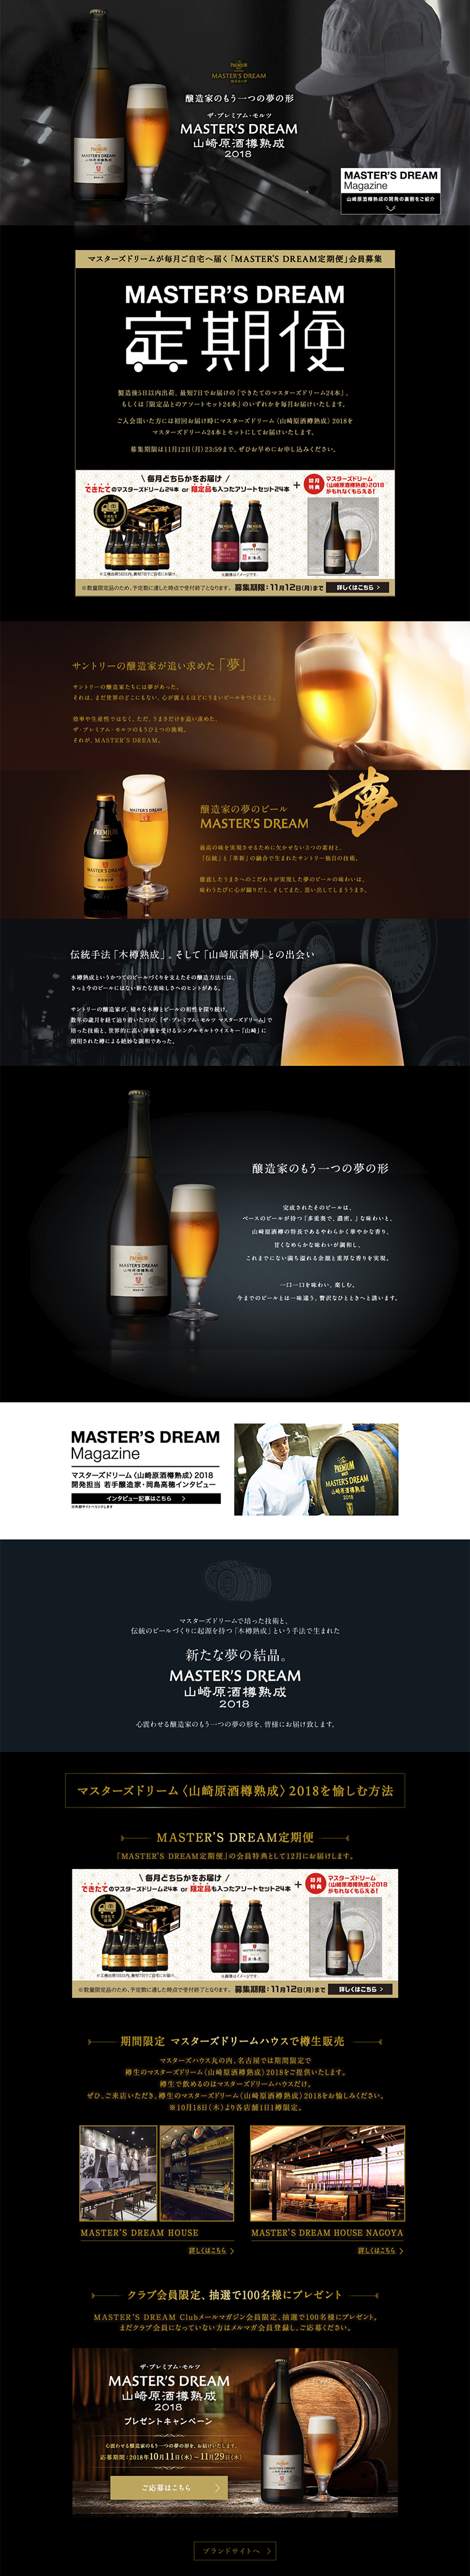 「MASTER'S DREAM Club」会員限定〈山崎原酒樽熟成〉2018 プレゼントキャンペーン_pc_1